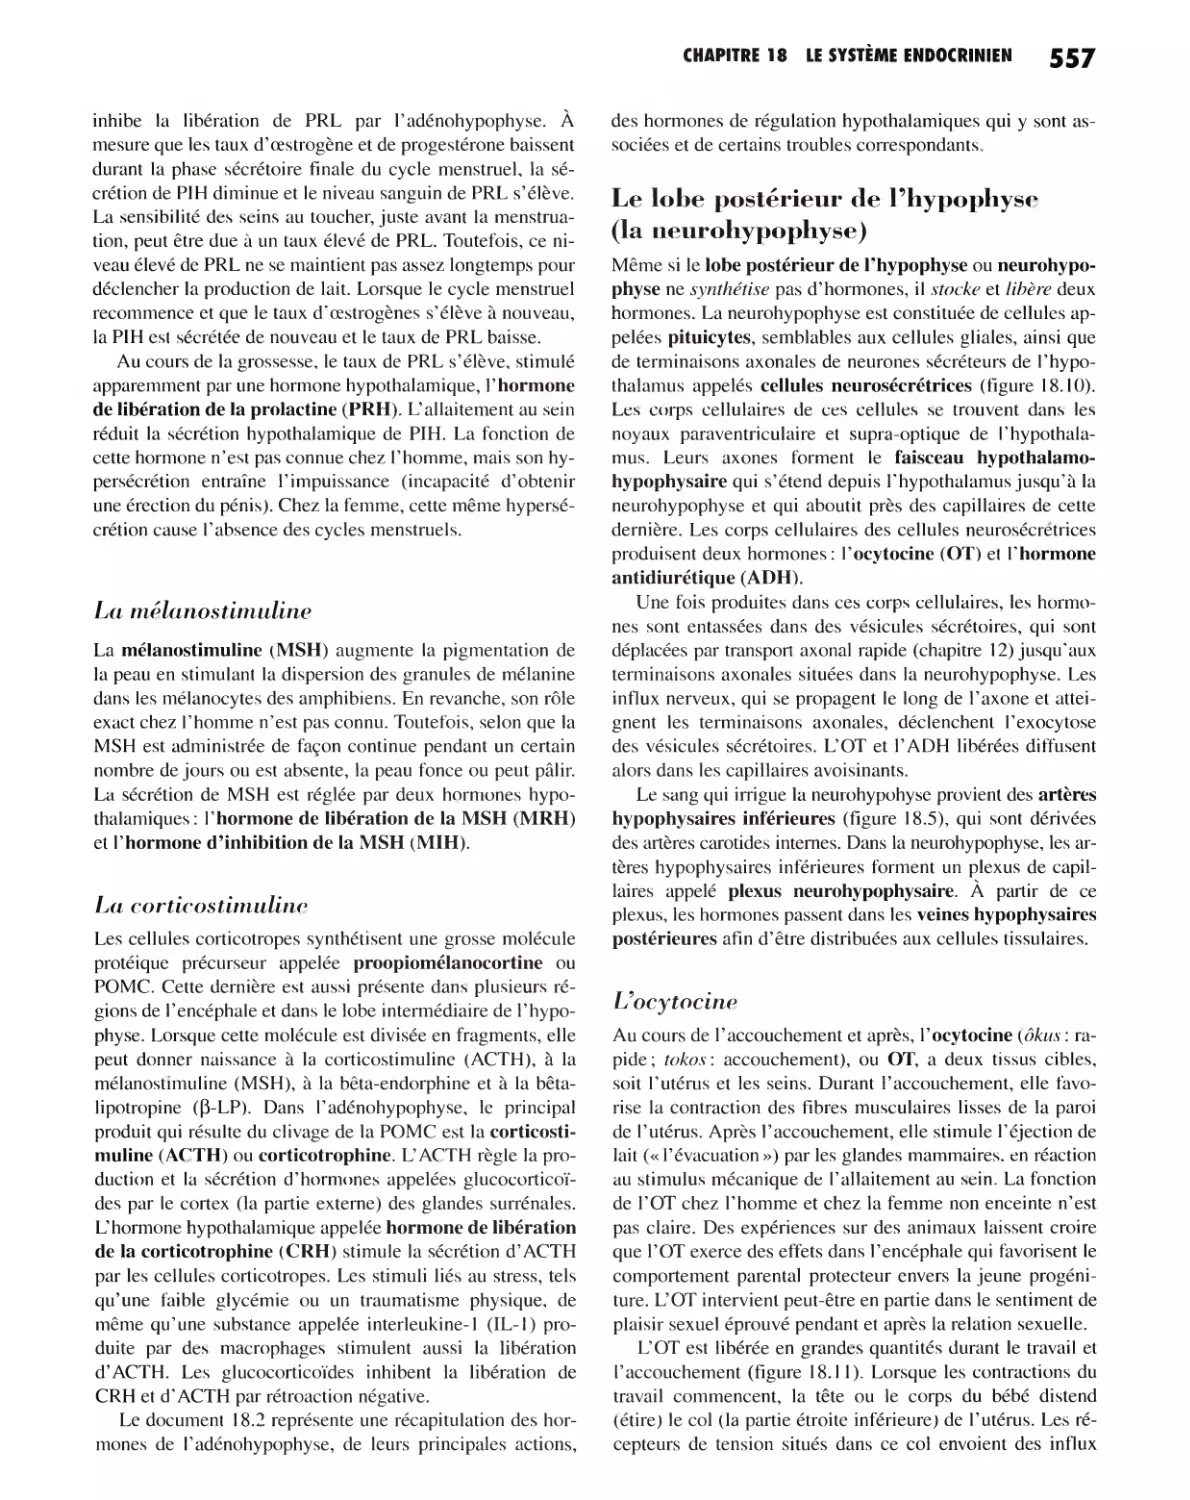 La mélanostimuline
La corticostimuline
L'ocytocine